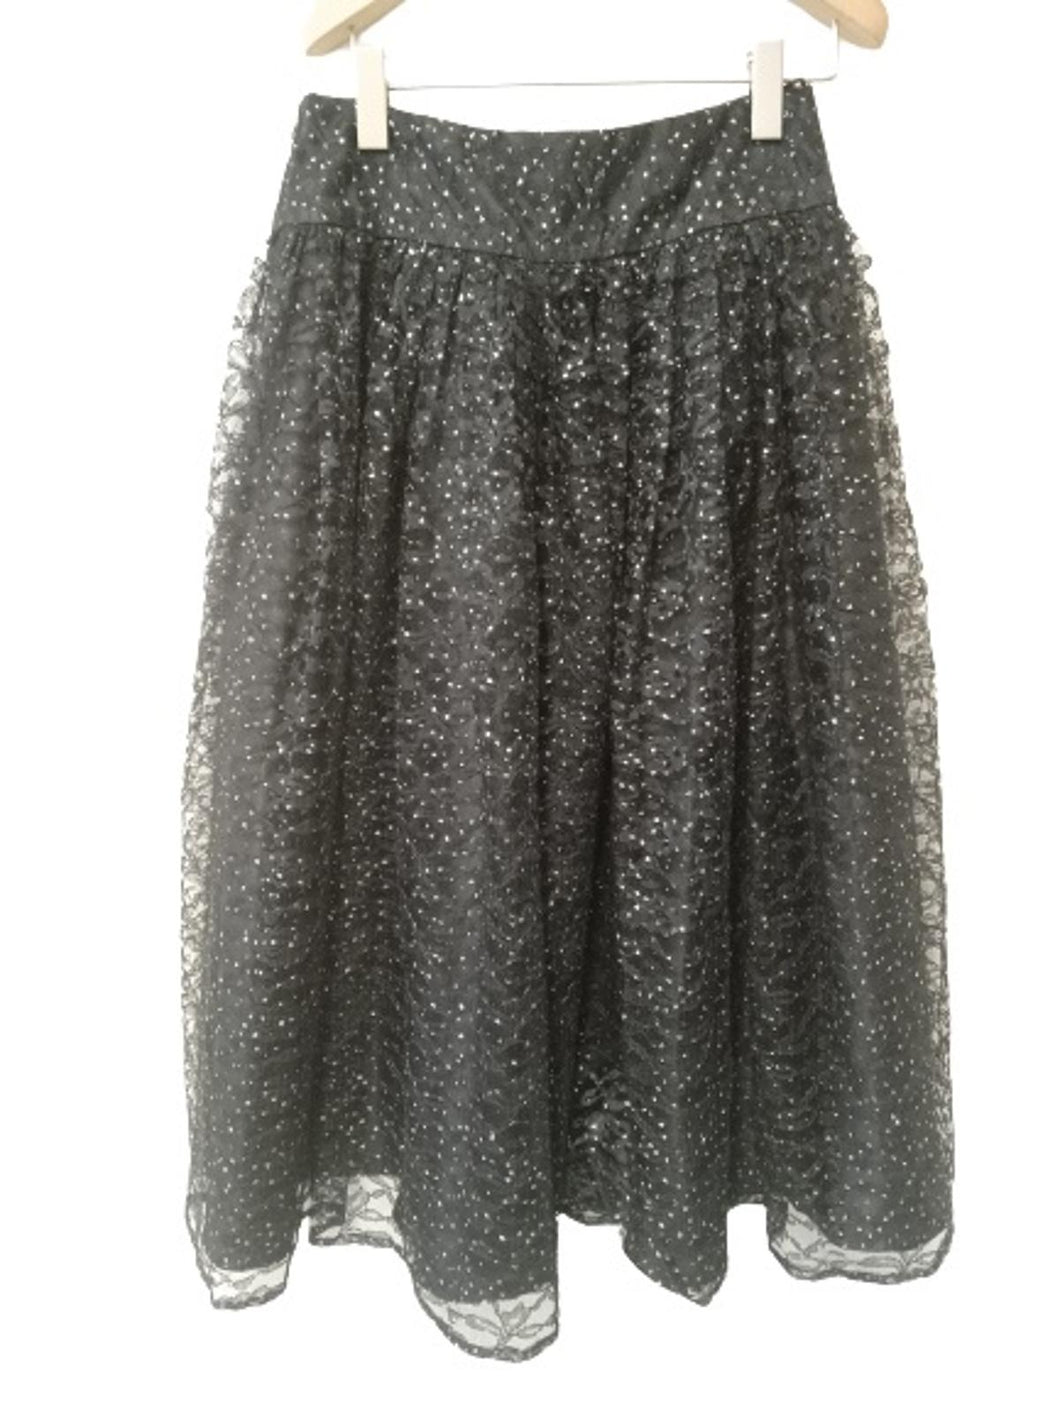 FRANK USHER Ladies Black Lace Detail Sparkly Maxi Skirt Size UK W29L31